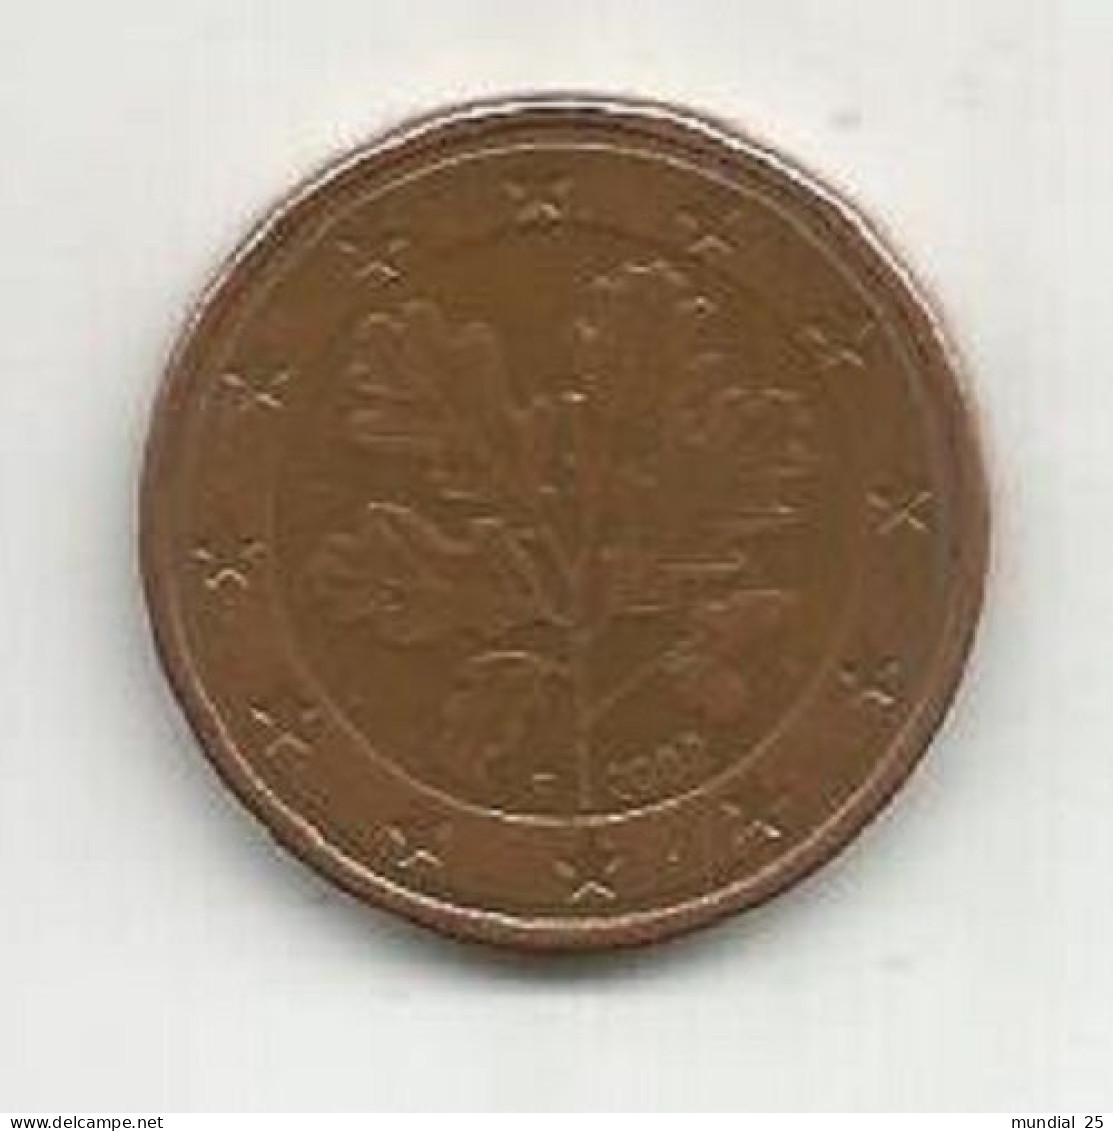 GERMANY 5 EURO CENT 2002 (F) - Duitsland